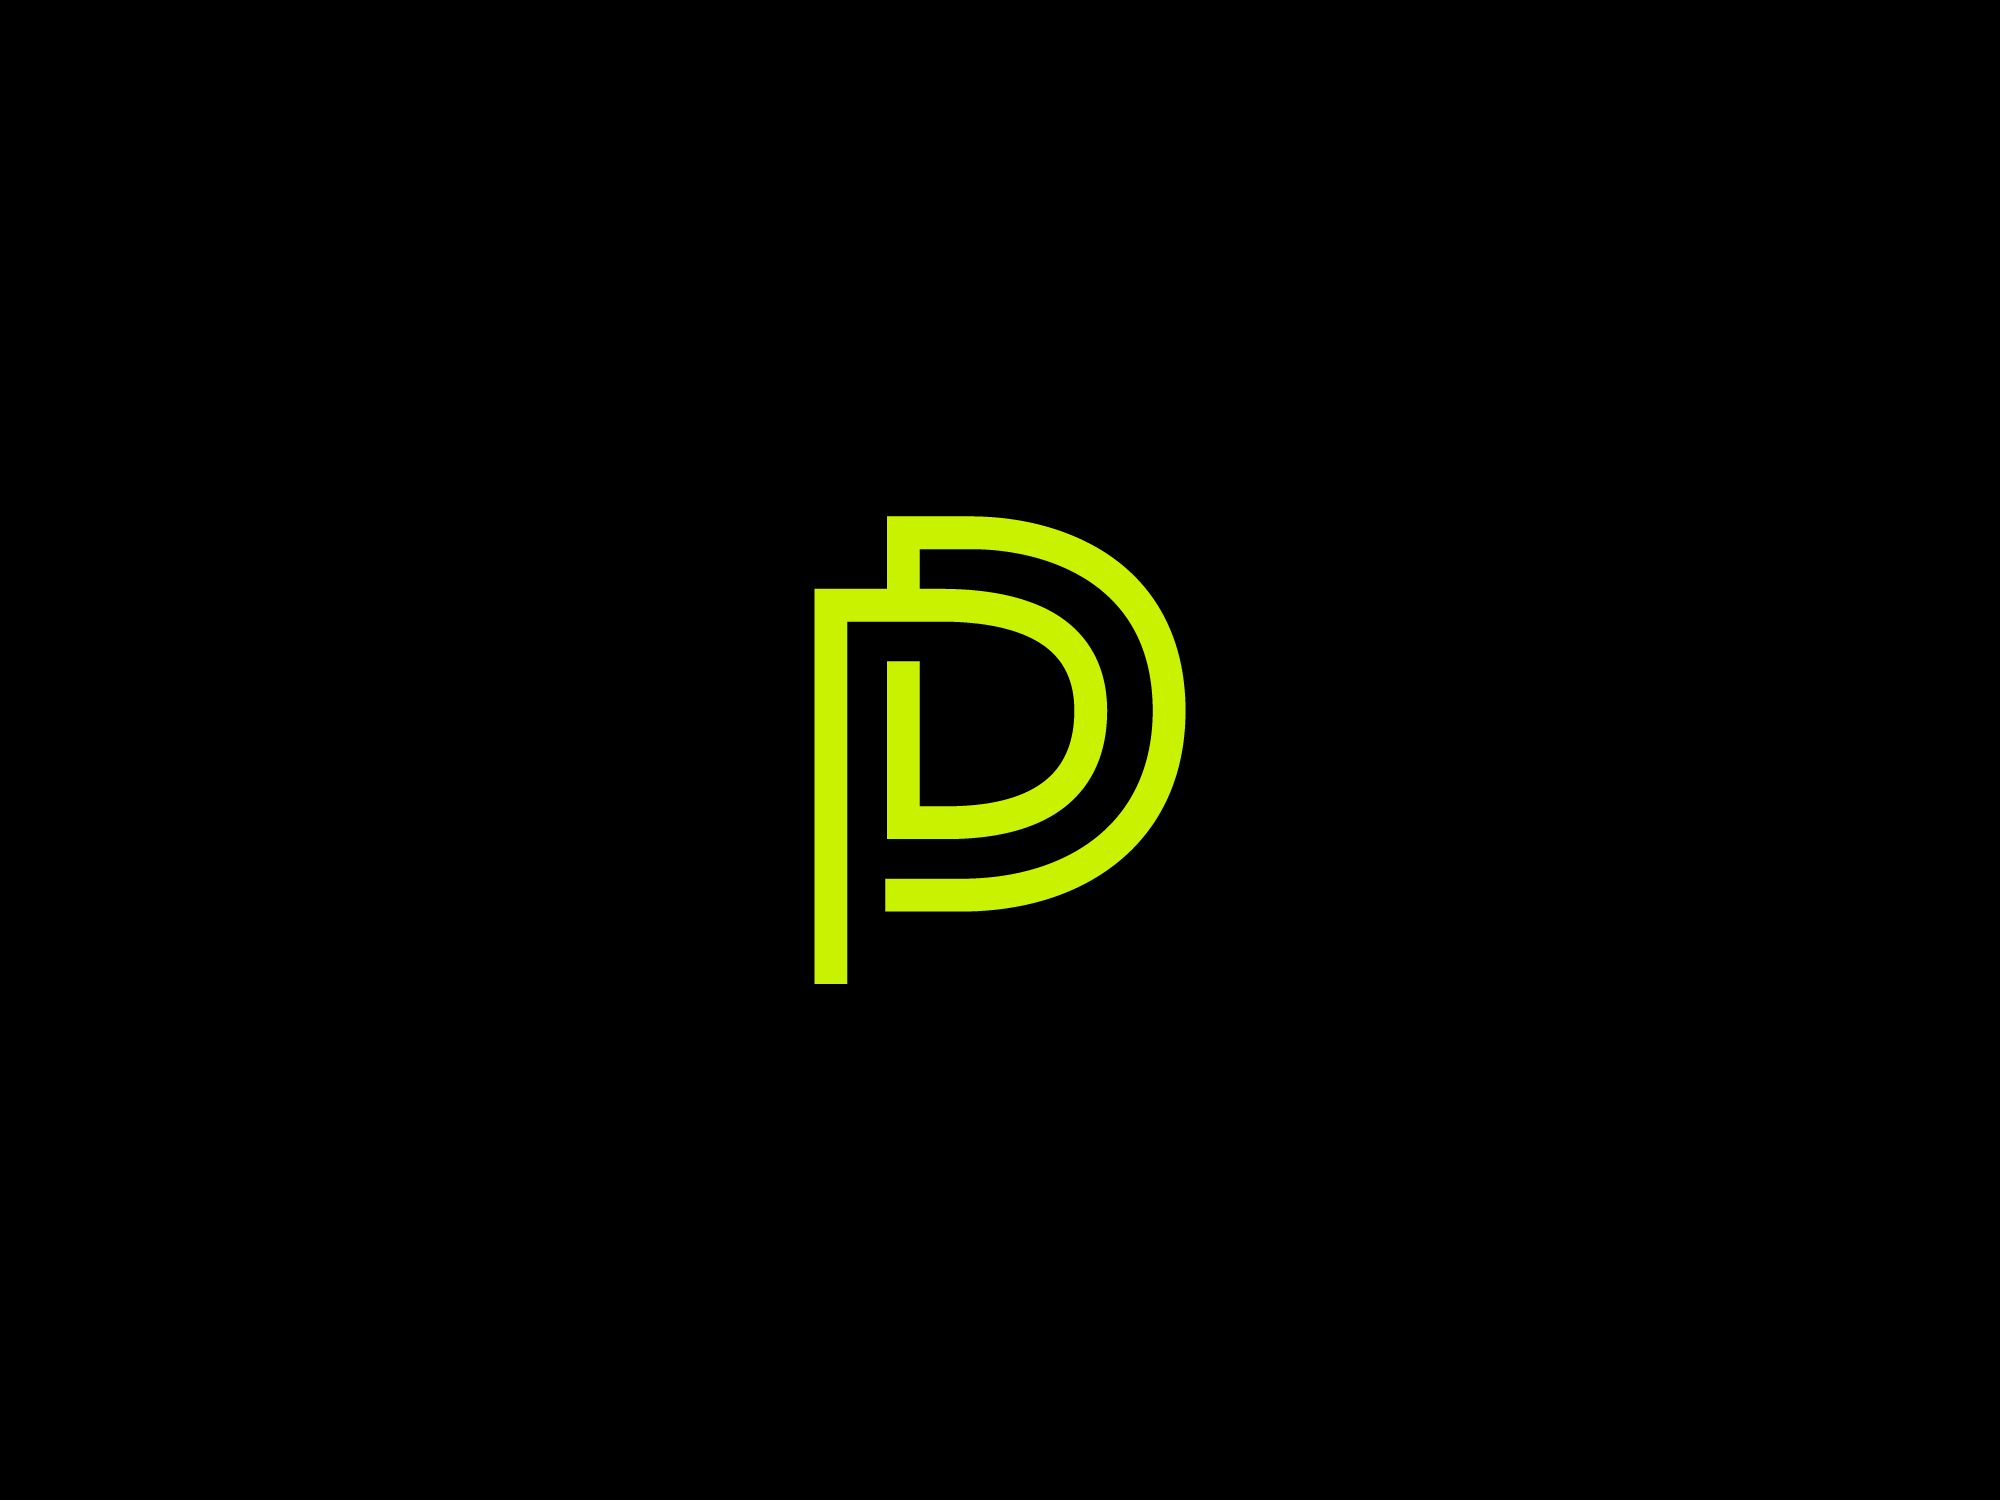 PD_Monogram